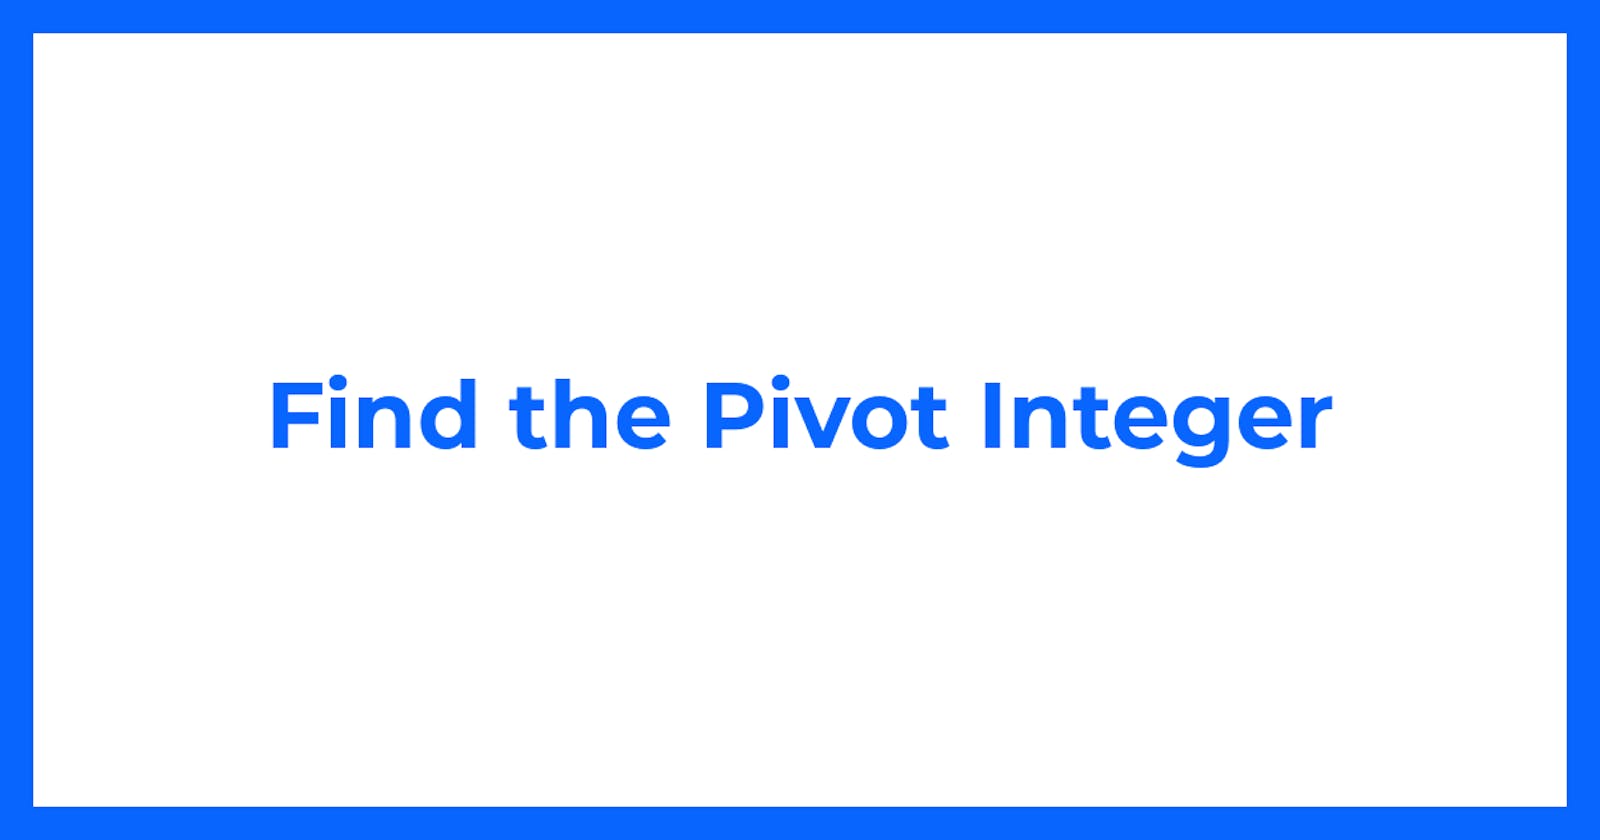 Find the Pivot Integer